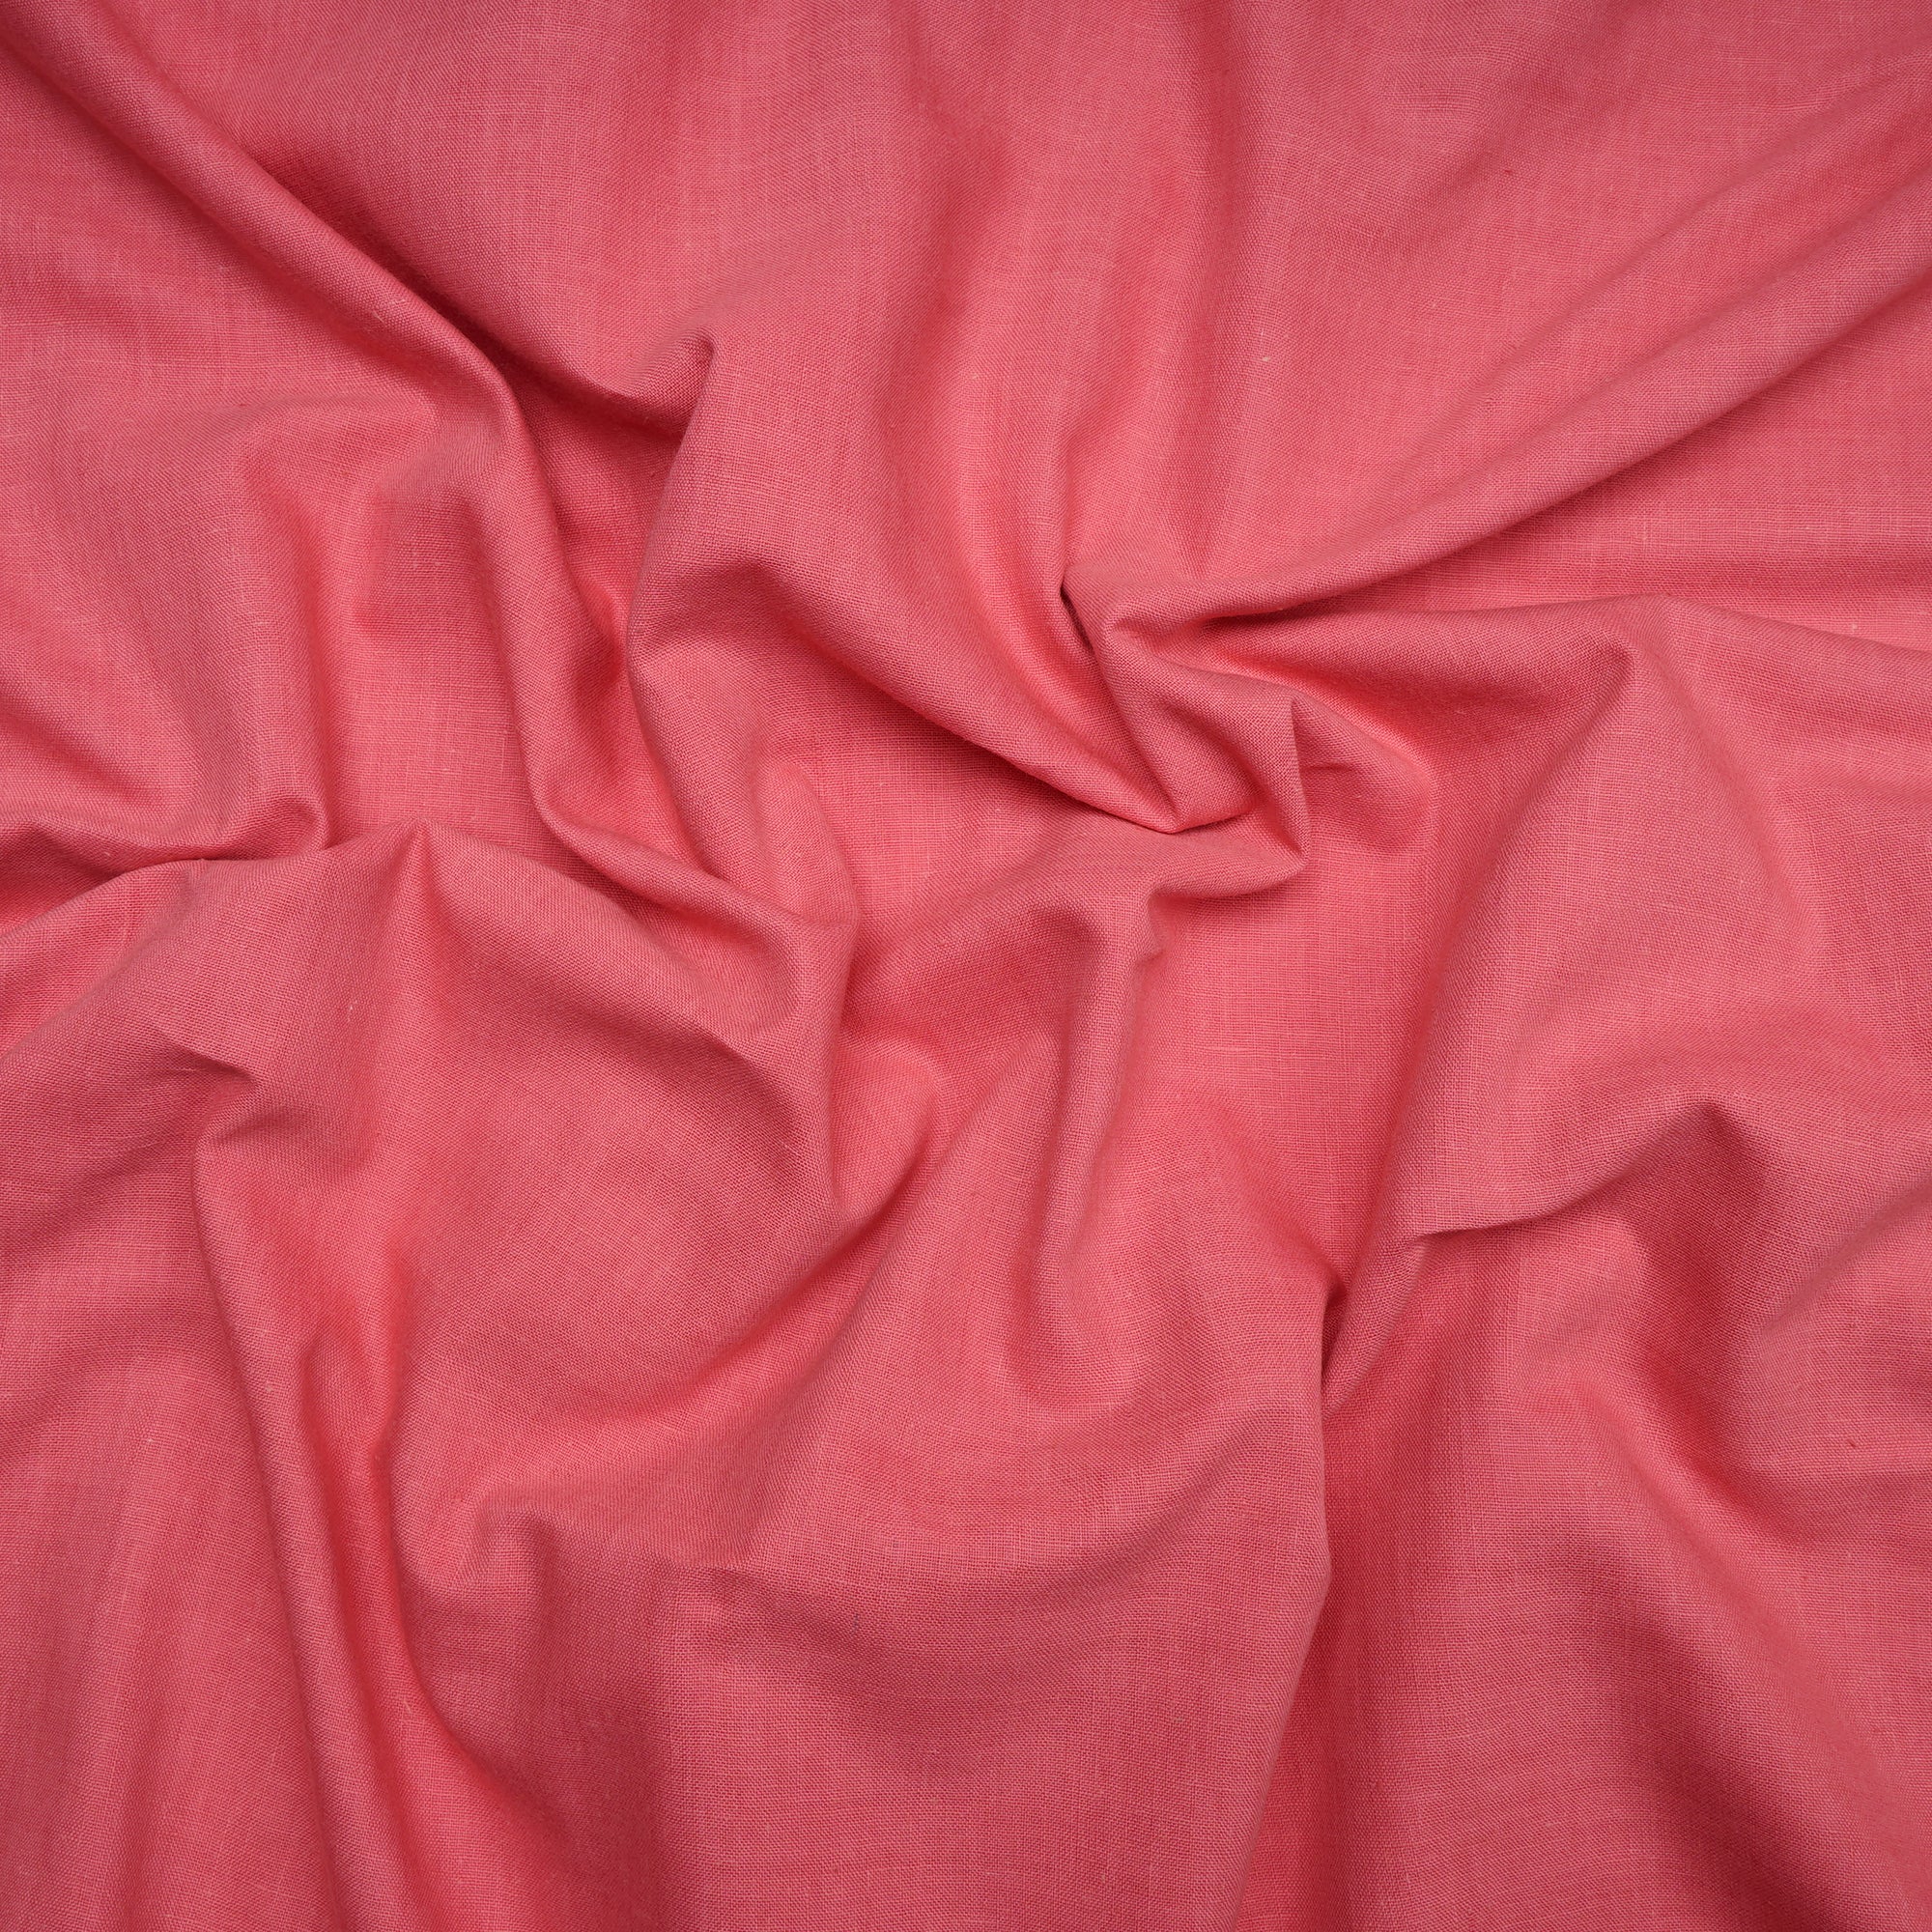 Pink Color Handwoven Handspun Cotton Fabric